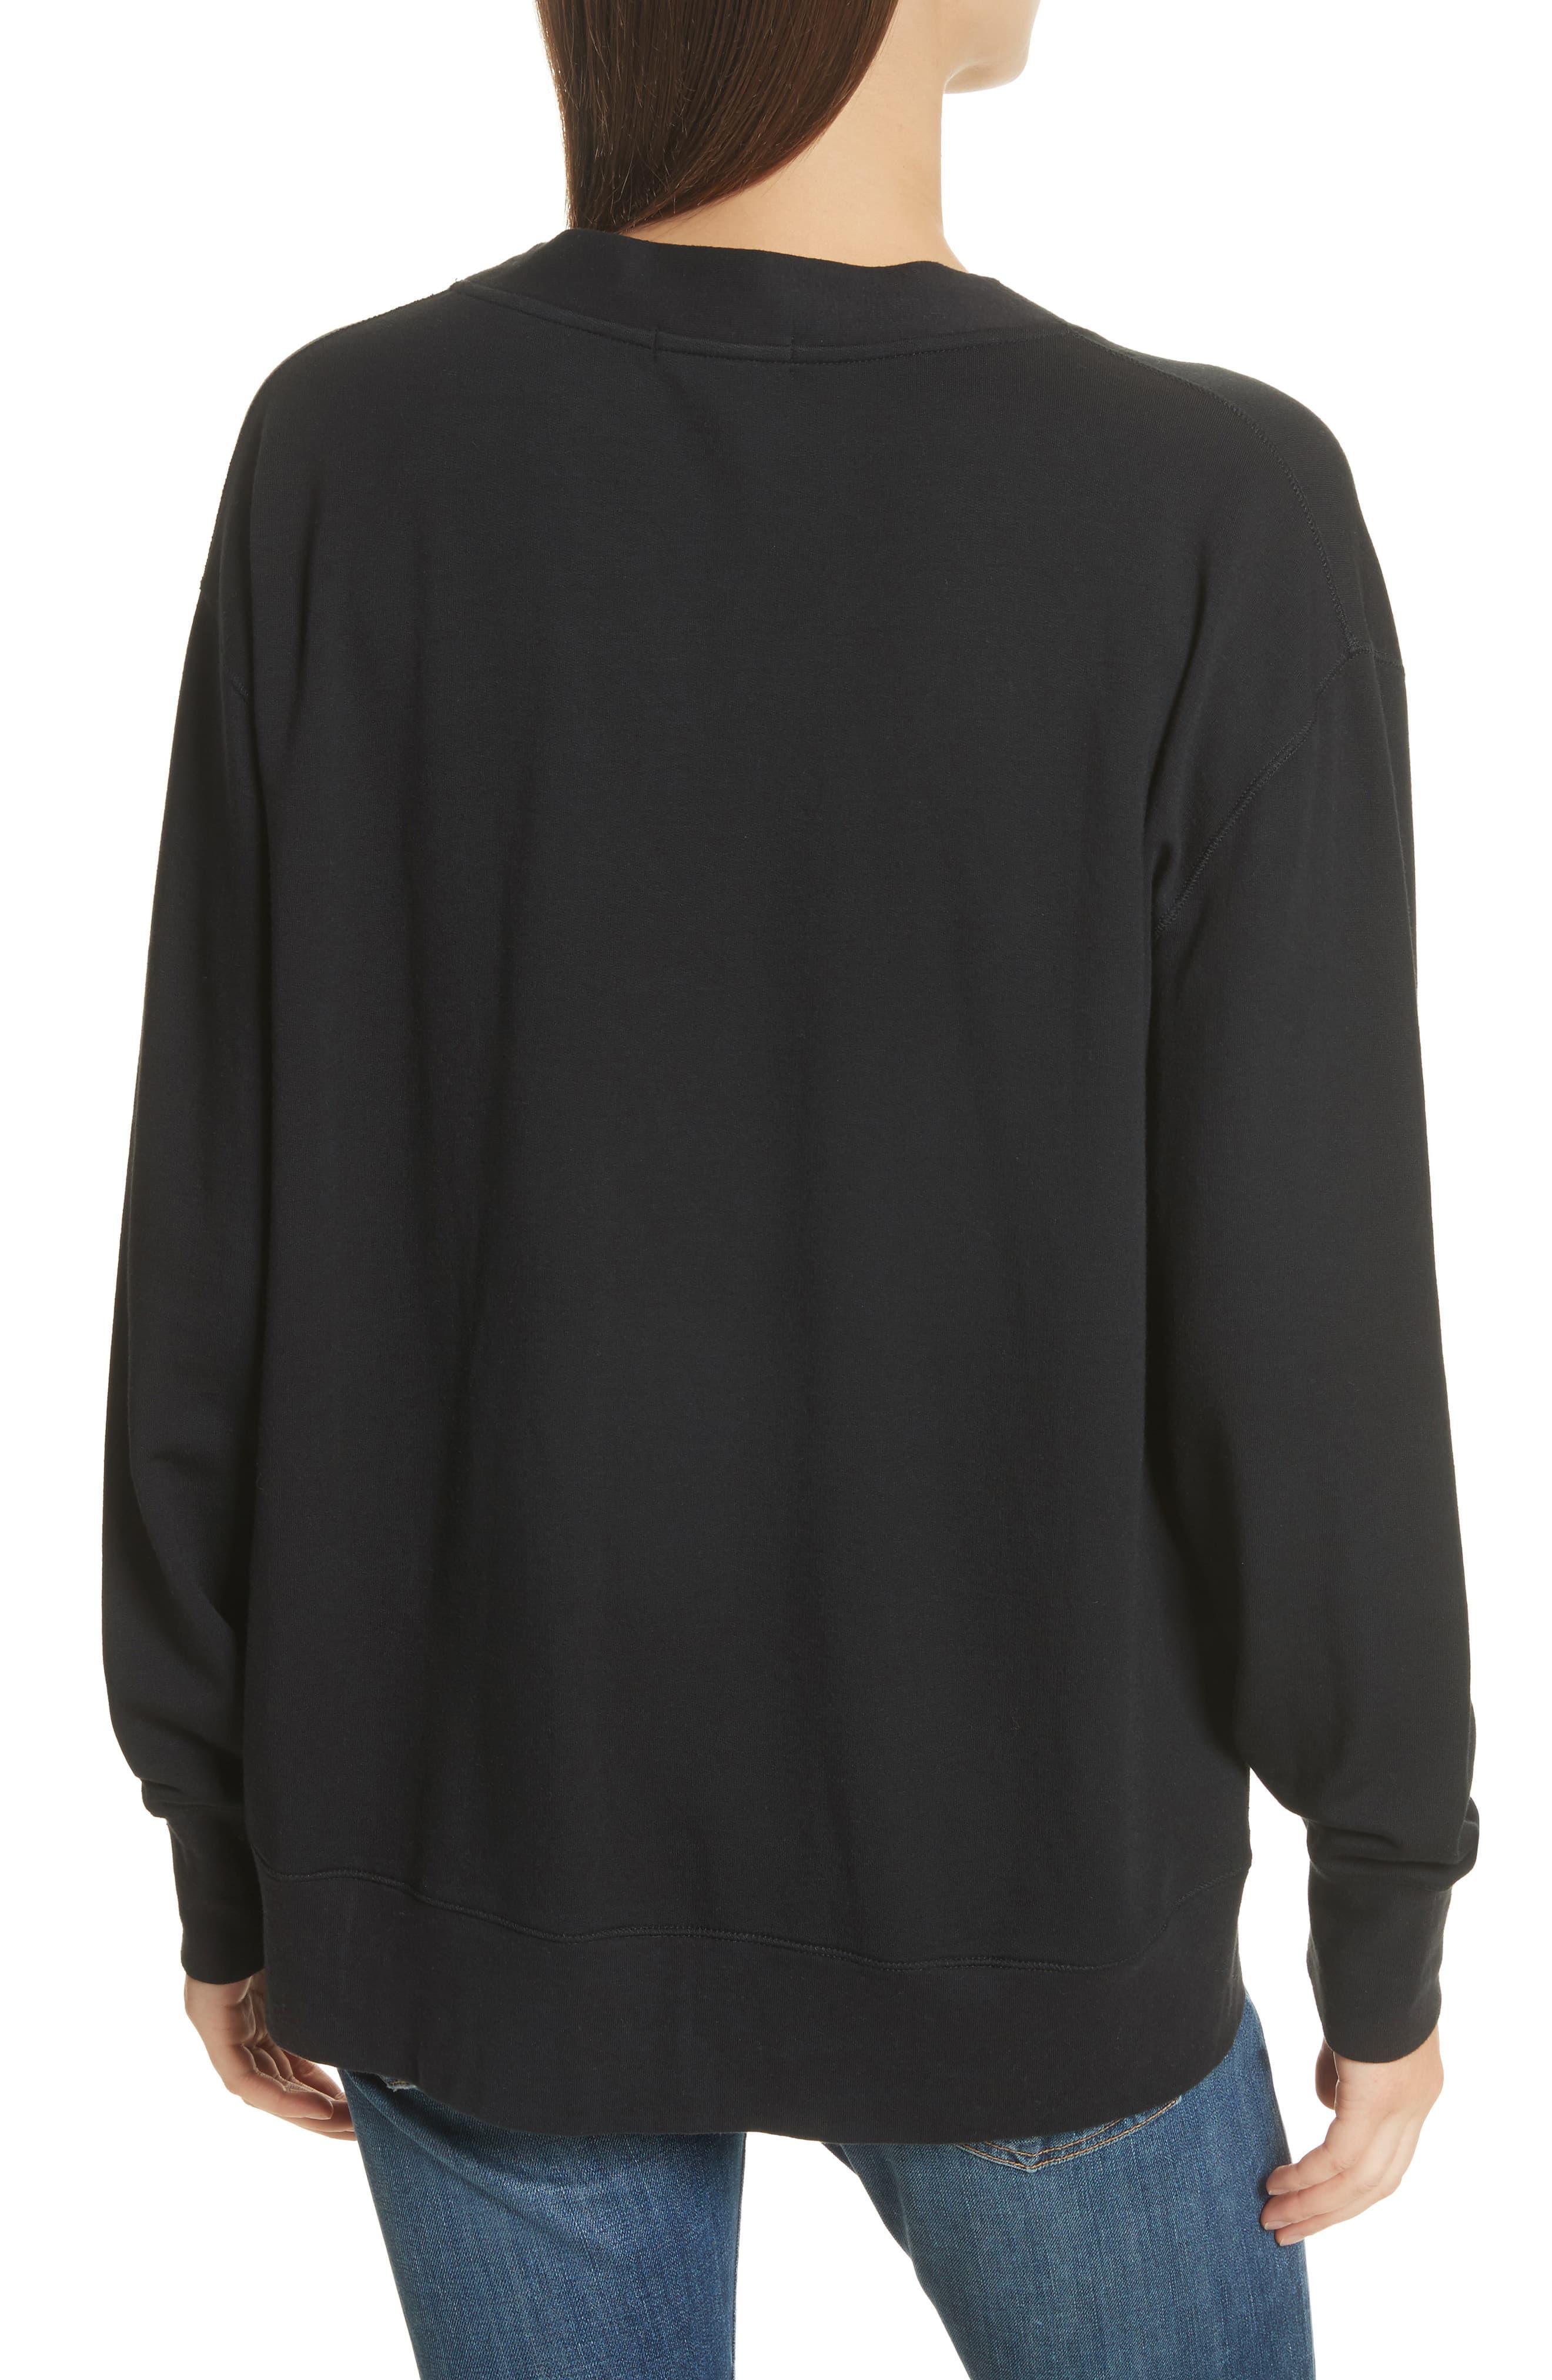 Rag & Bone Flora Sweatshirt in Black - Lyst